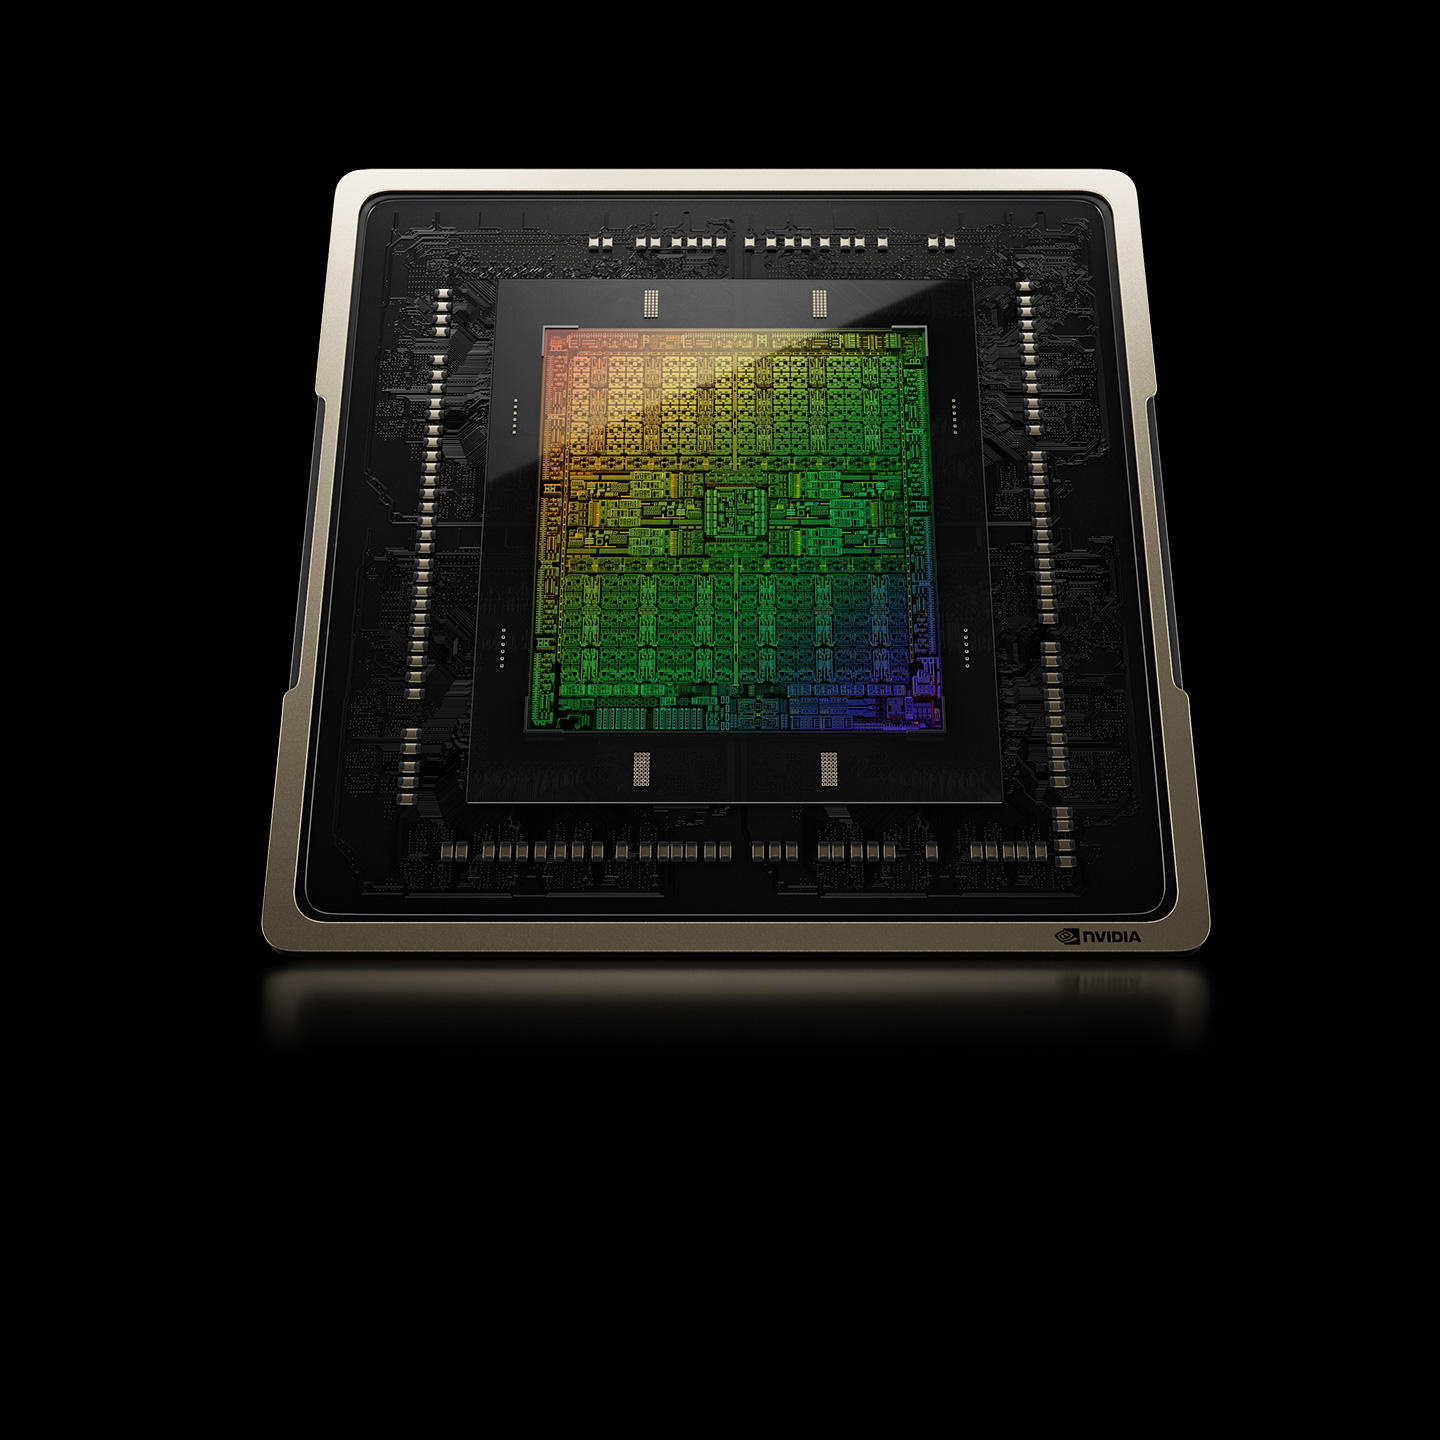 image  1 NVIDIA - Introducing the NVIDIA Ada Lovelace architecture powering #NVIDIAGeForce RTX 40 Series GPUs